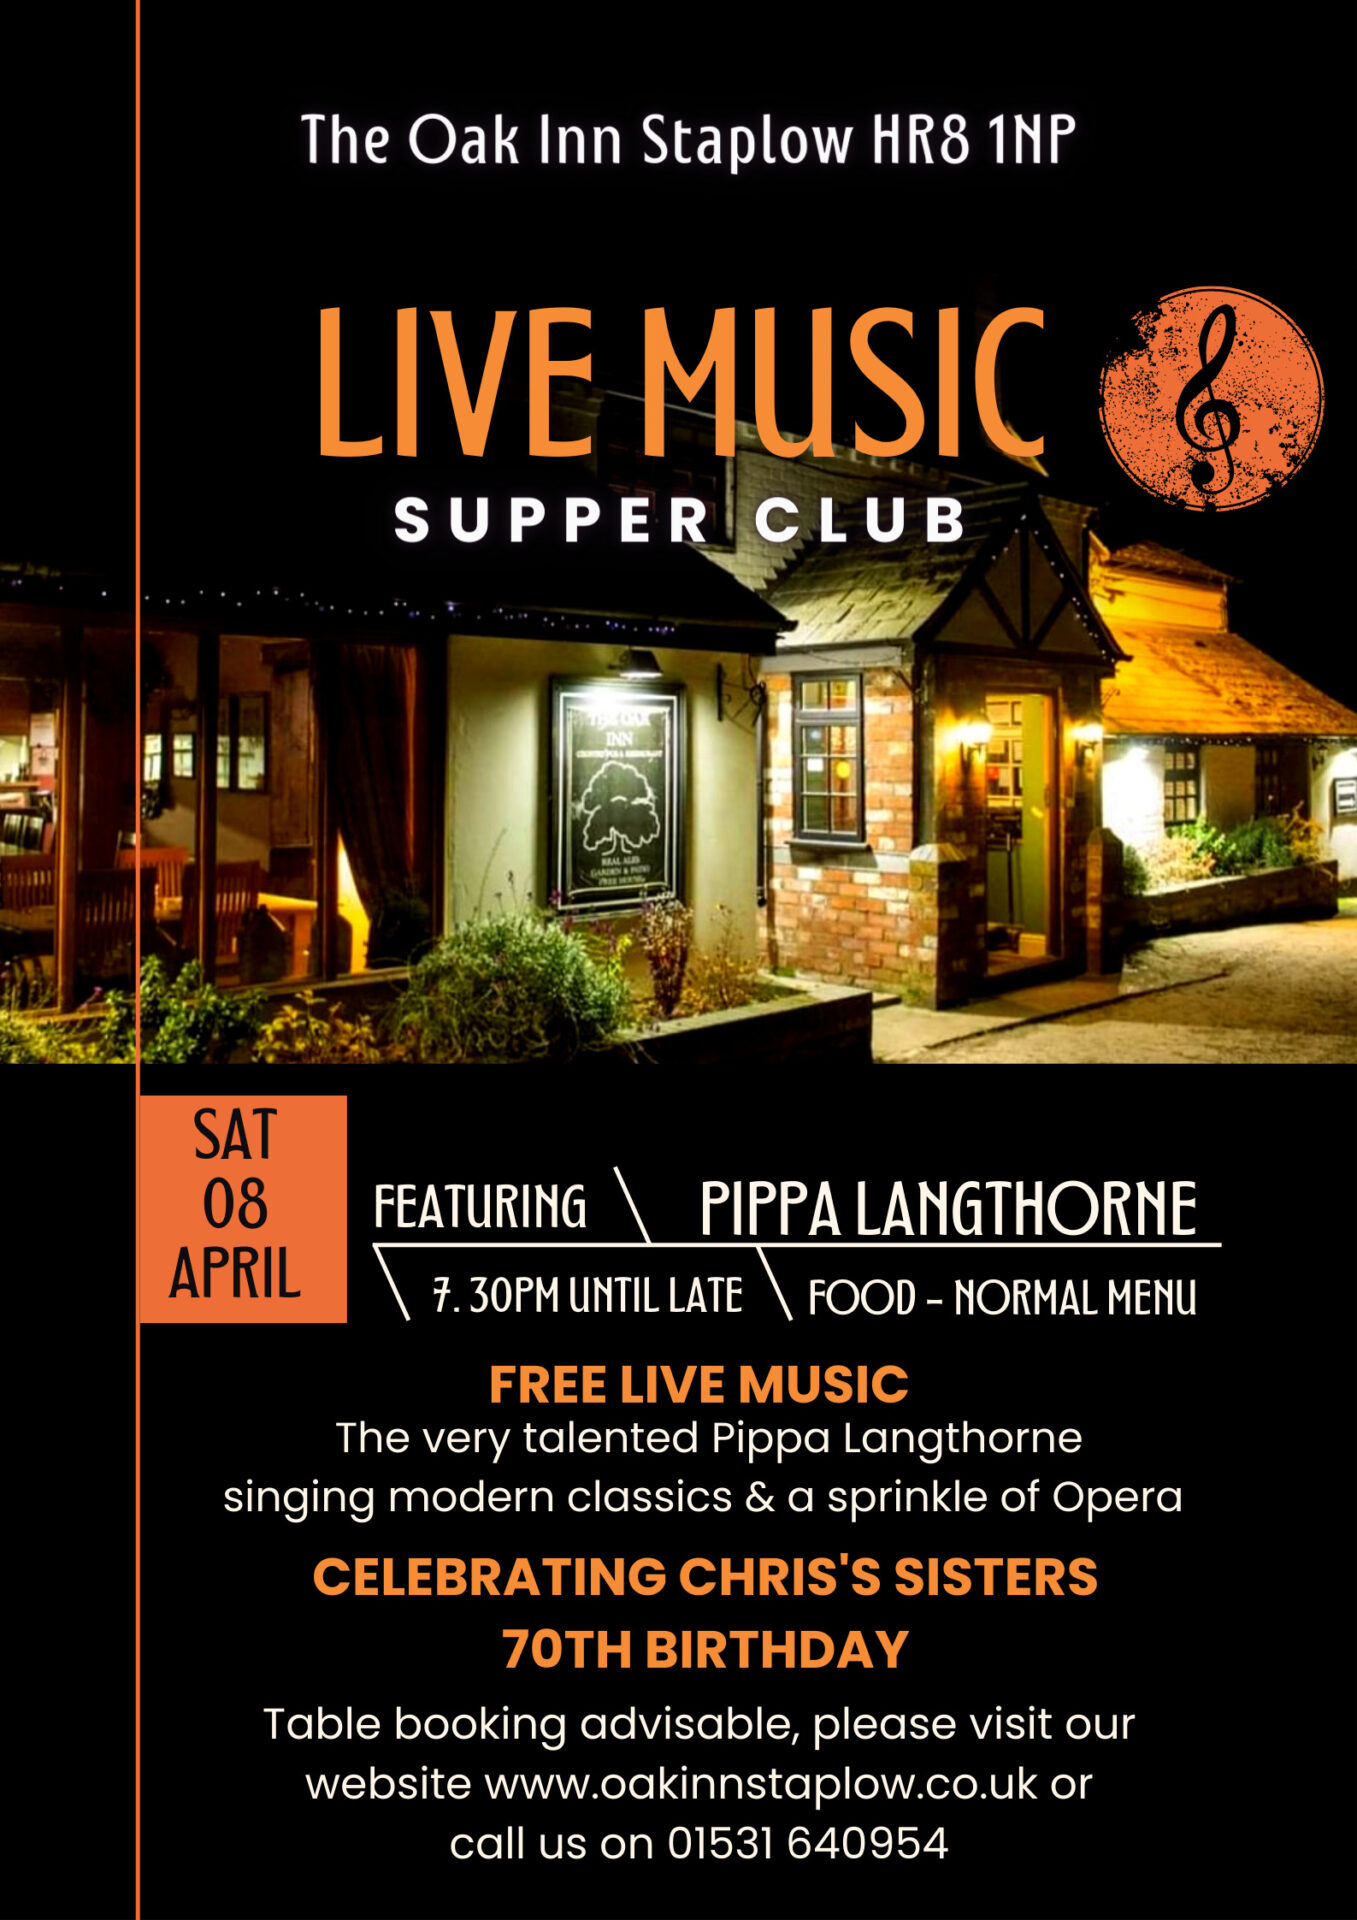 Free Live Music Event at The Oak Inn Staplow Ledbury Herefordshire. Saturday 8th April